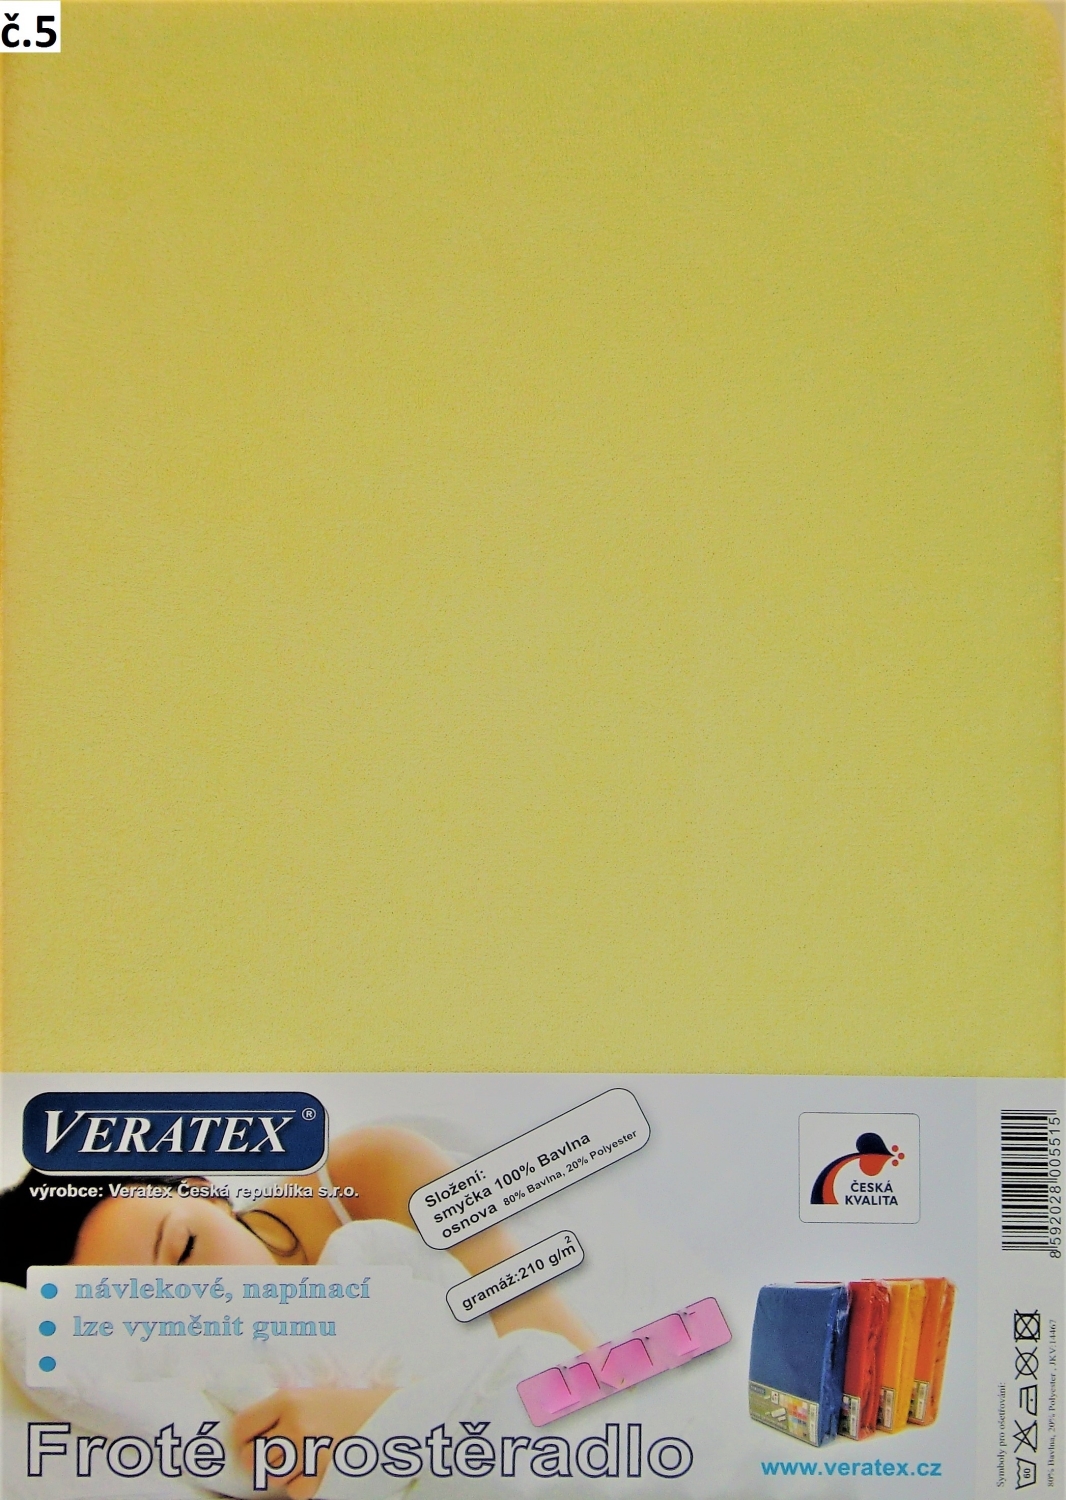 Veratex Froté prostěradlo 80 x 160 cm (č. 5-sv.žlutá) 80 x 160 cm